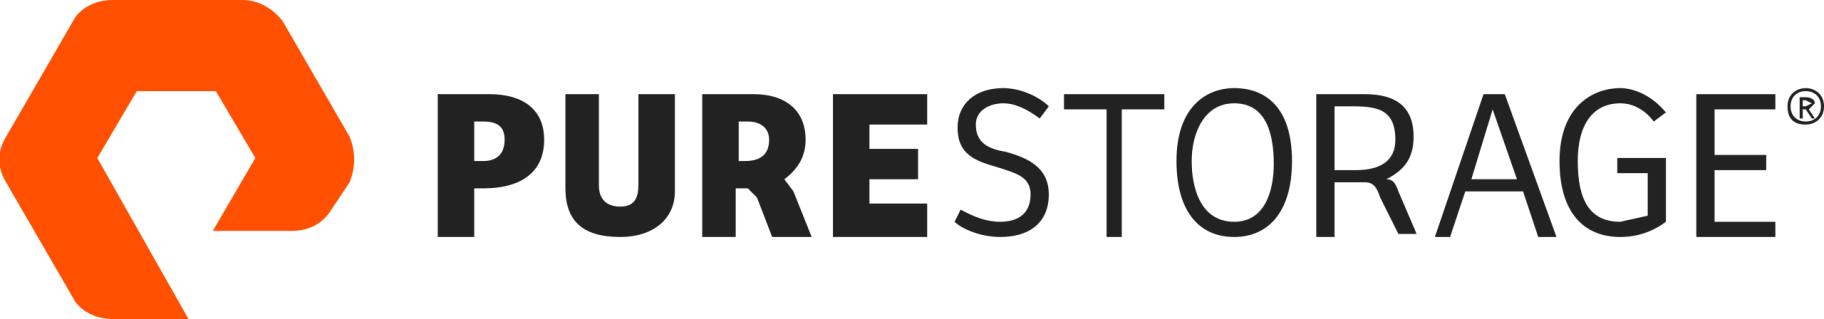 purestorage logo